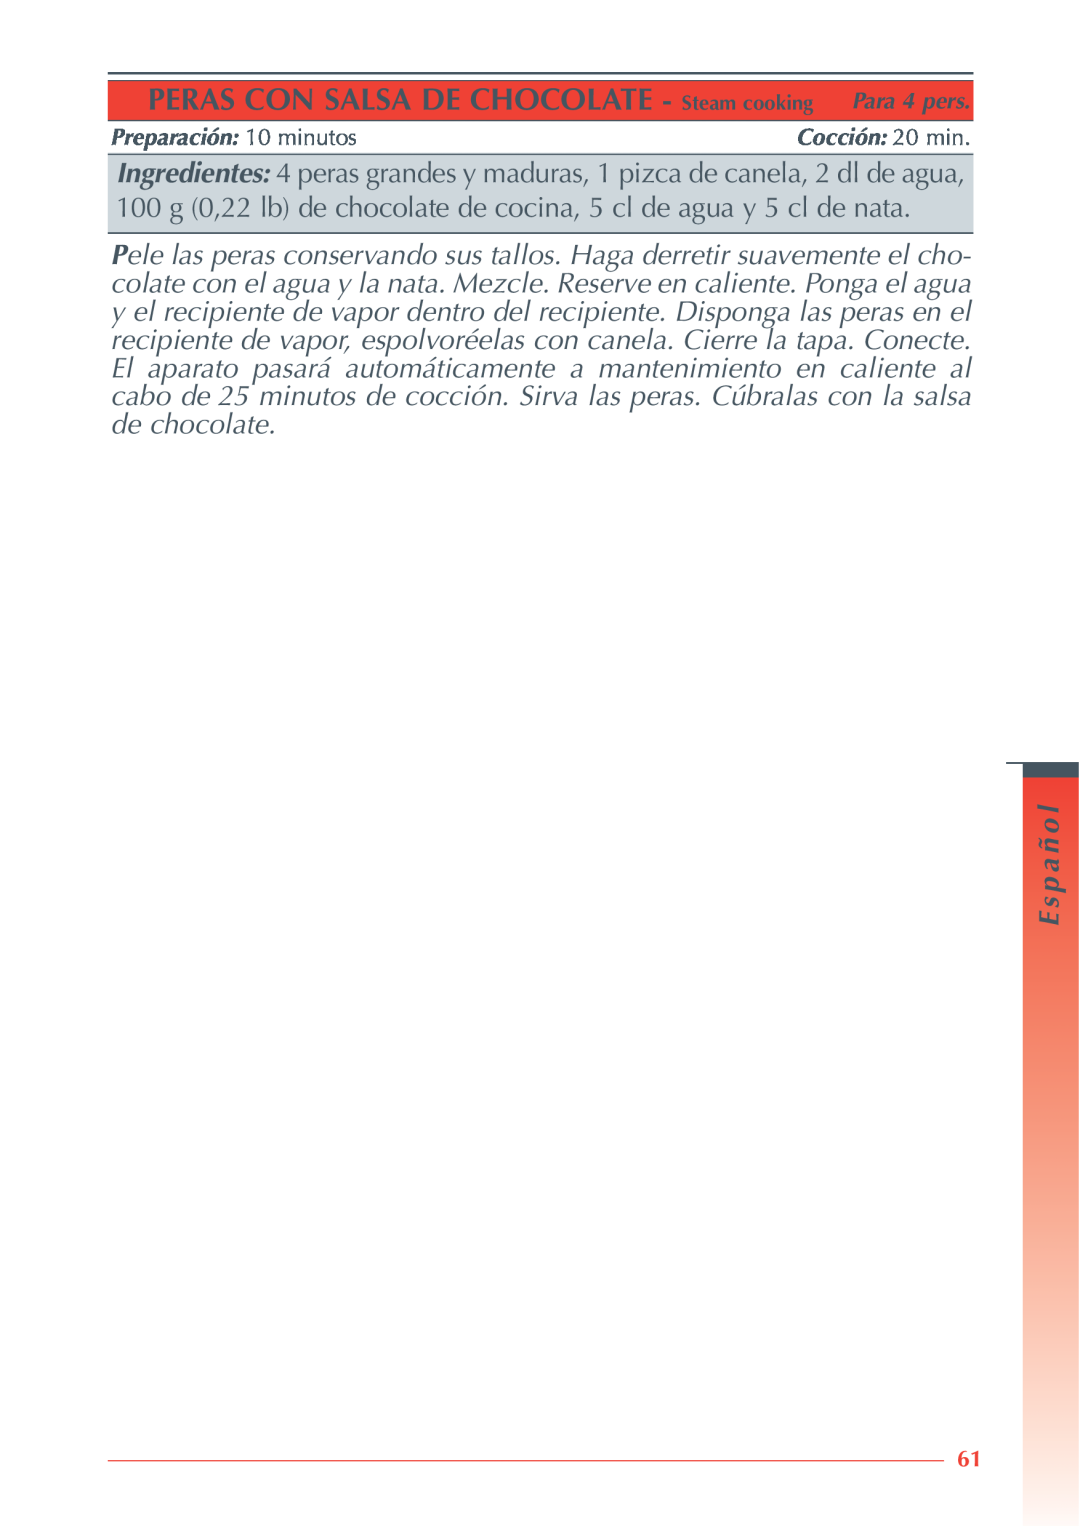 Krups 3.21 manual PERAS CON SALSA DE CHOCOLATE - Steam cooking Para 4 pers, Español 